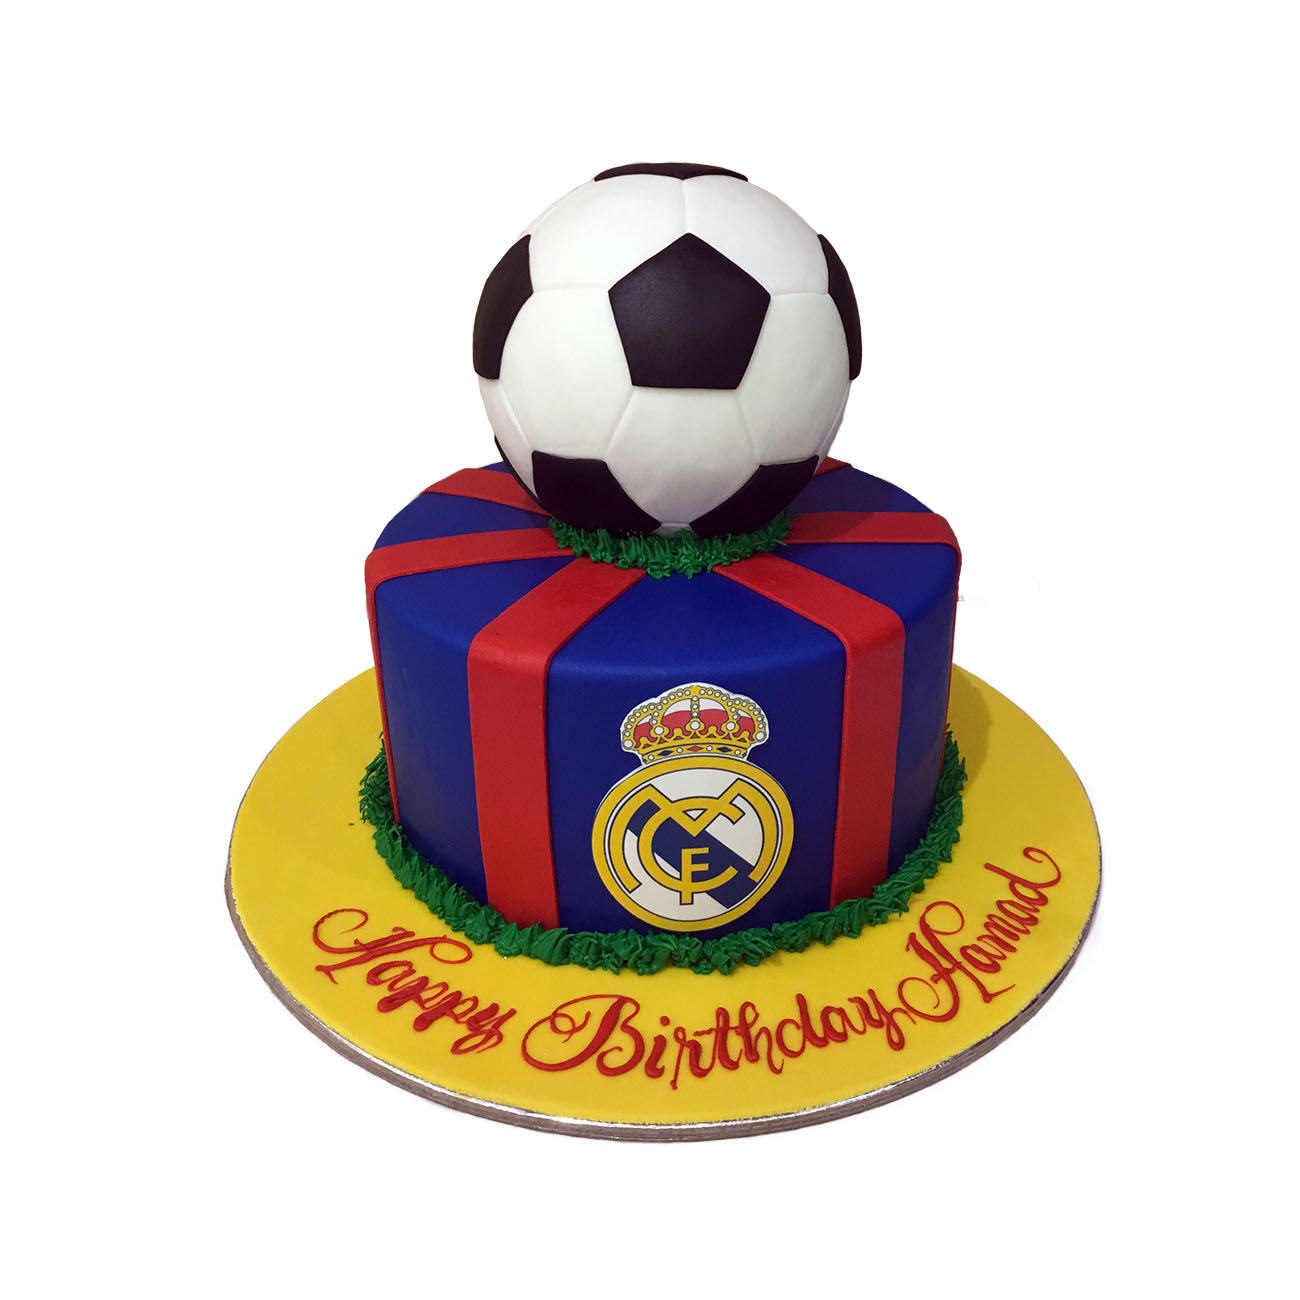 FC Barcelona Football Club Cake